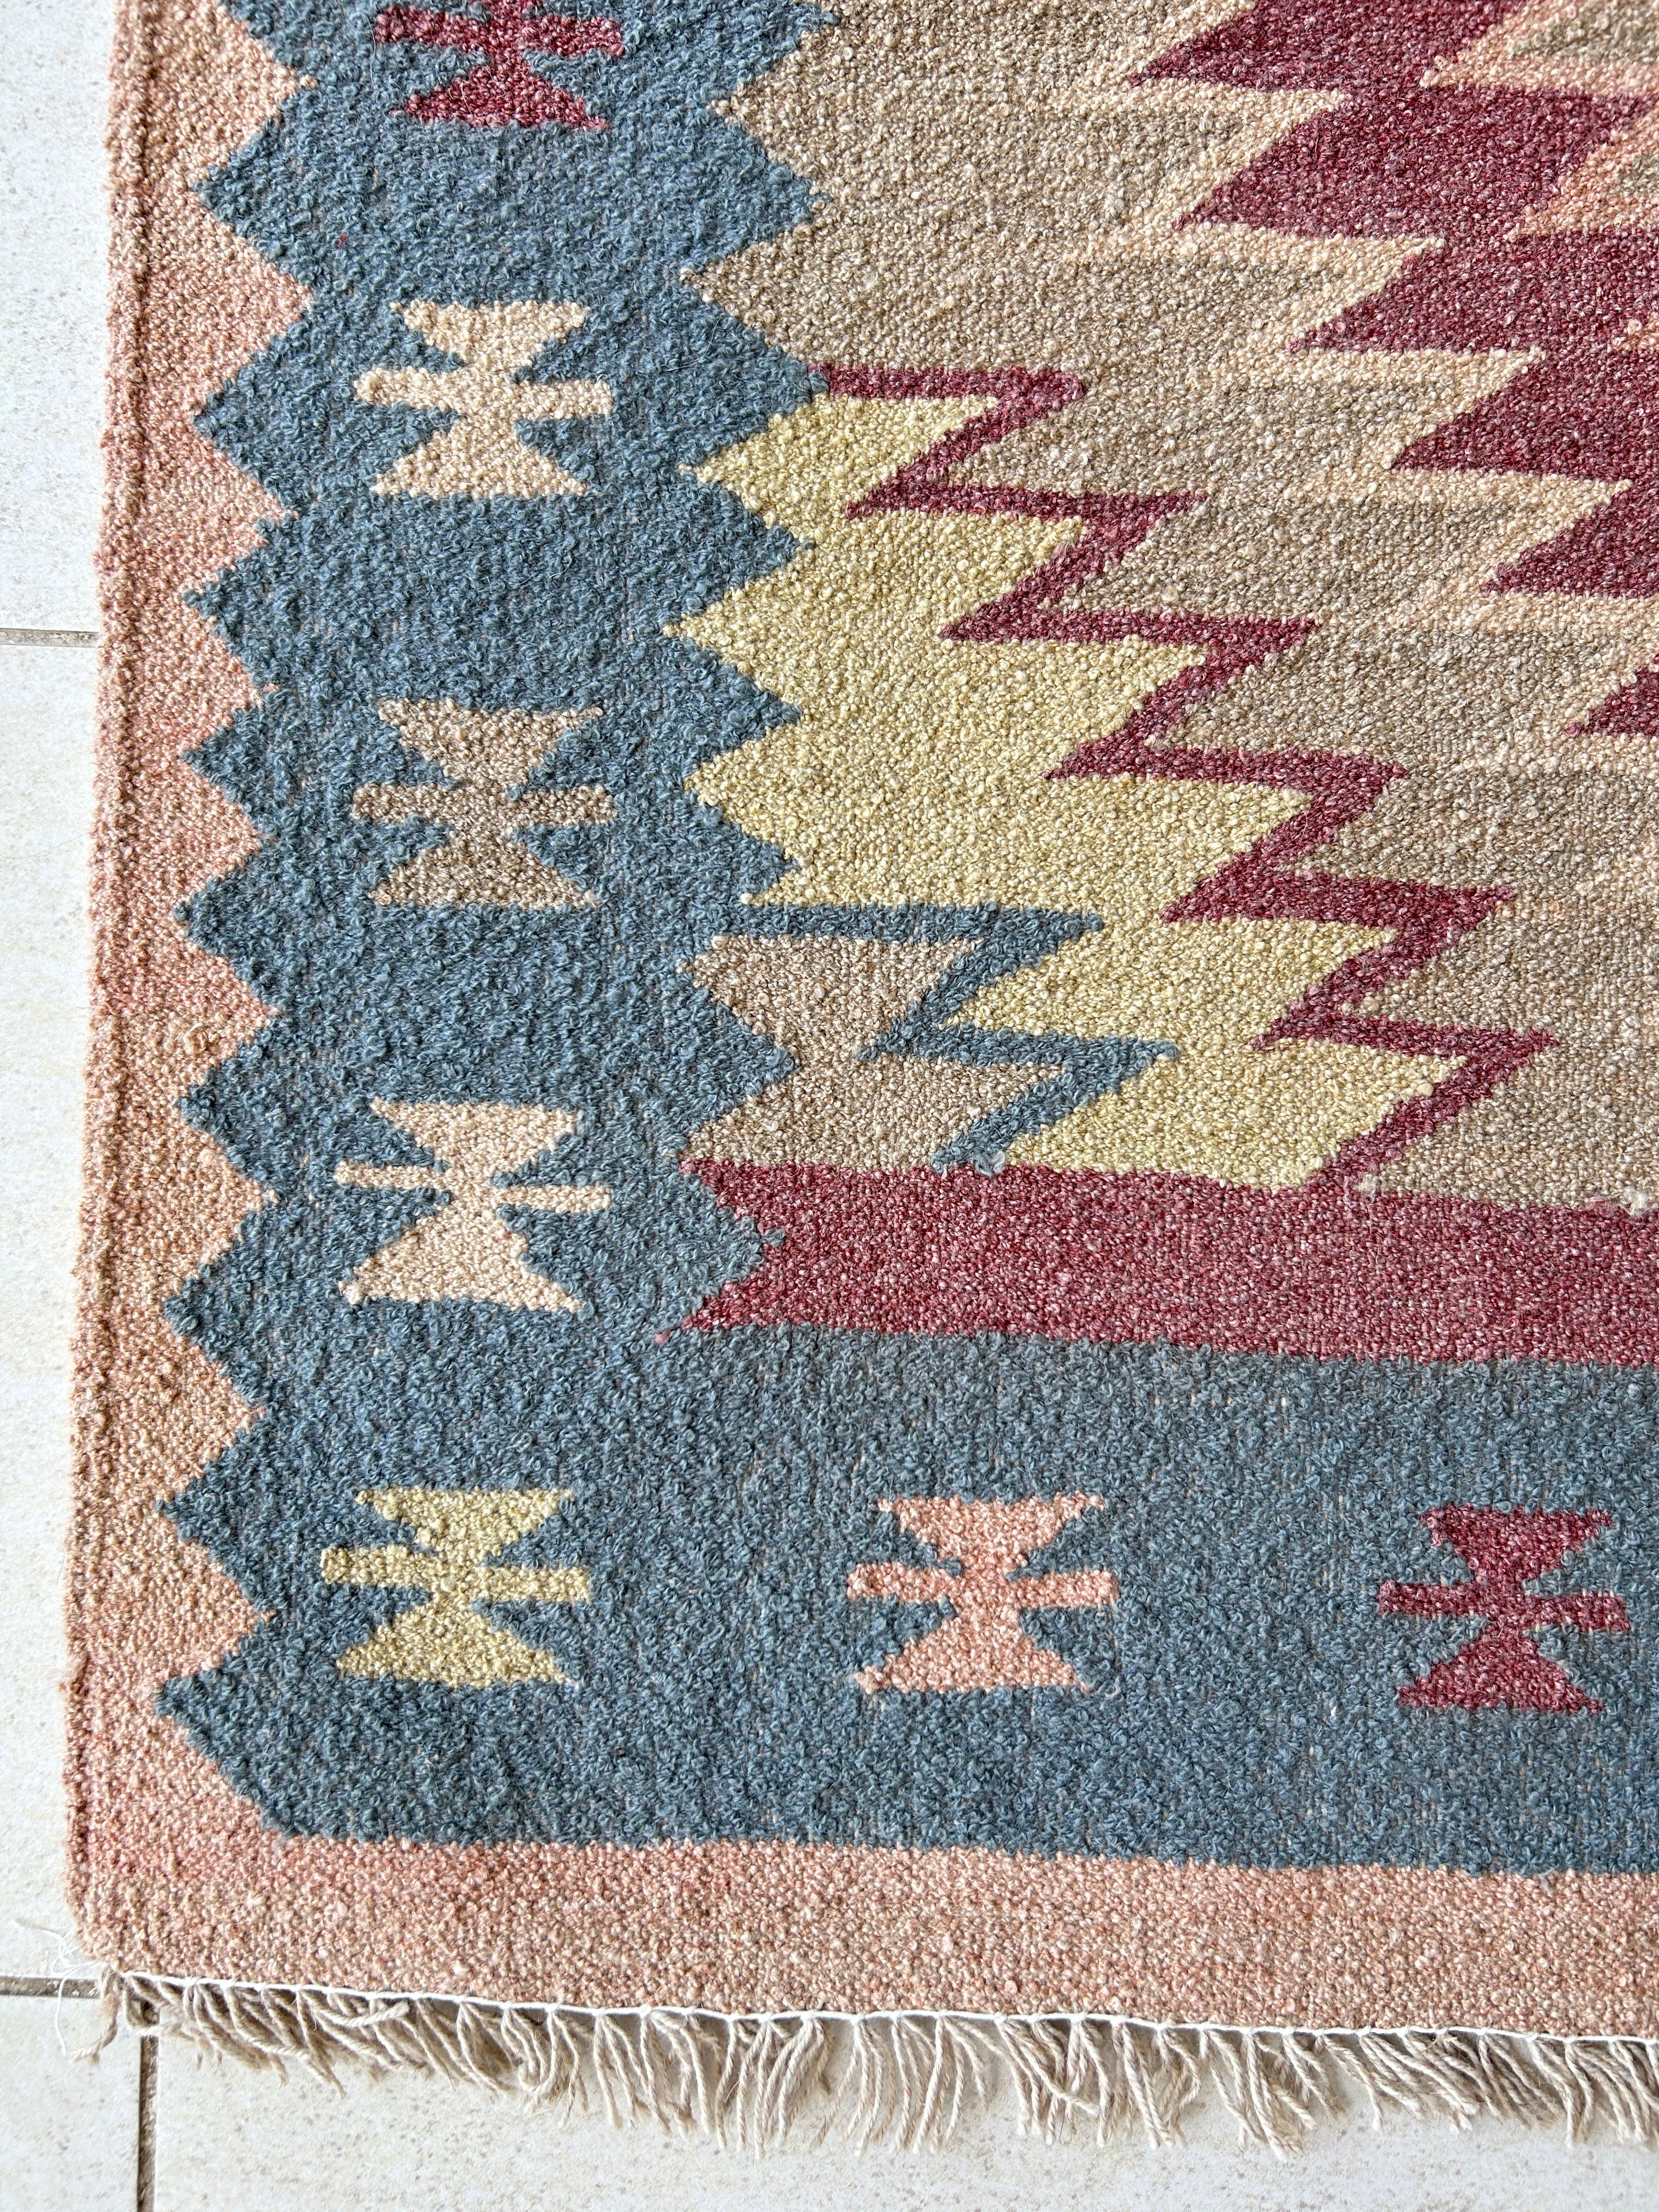 Handknotted Boho Afghan Kilim rug w/ blue and dusty rose tones (151cm x 102cm)